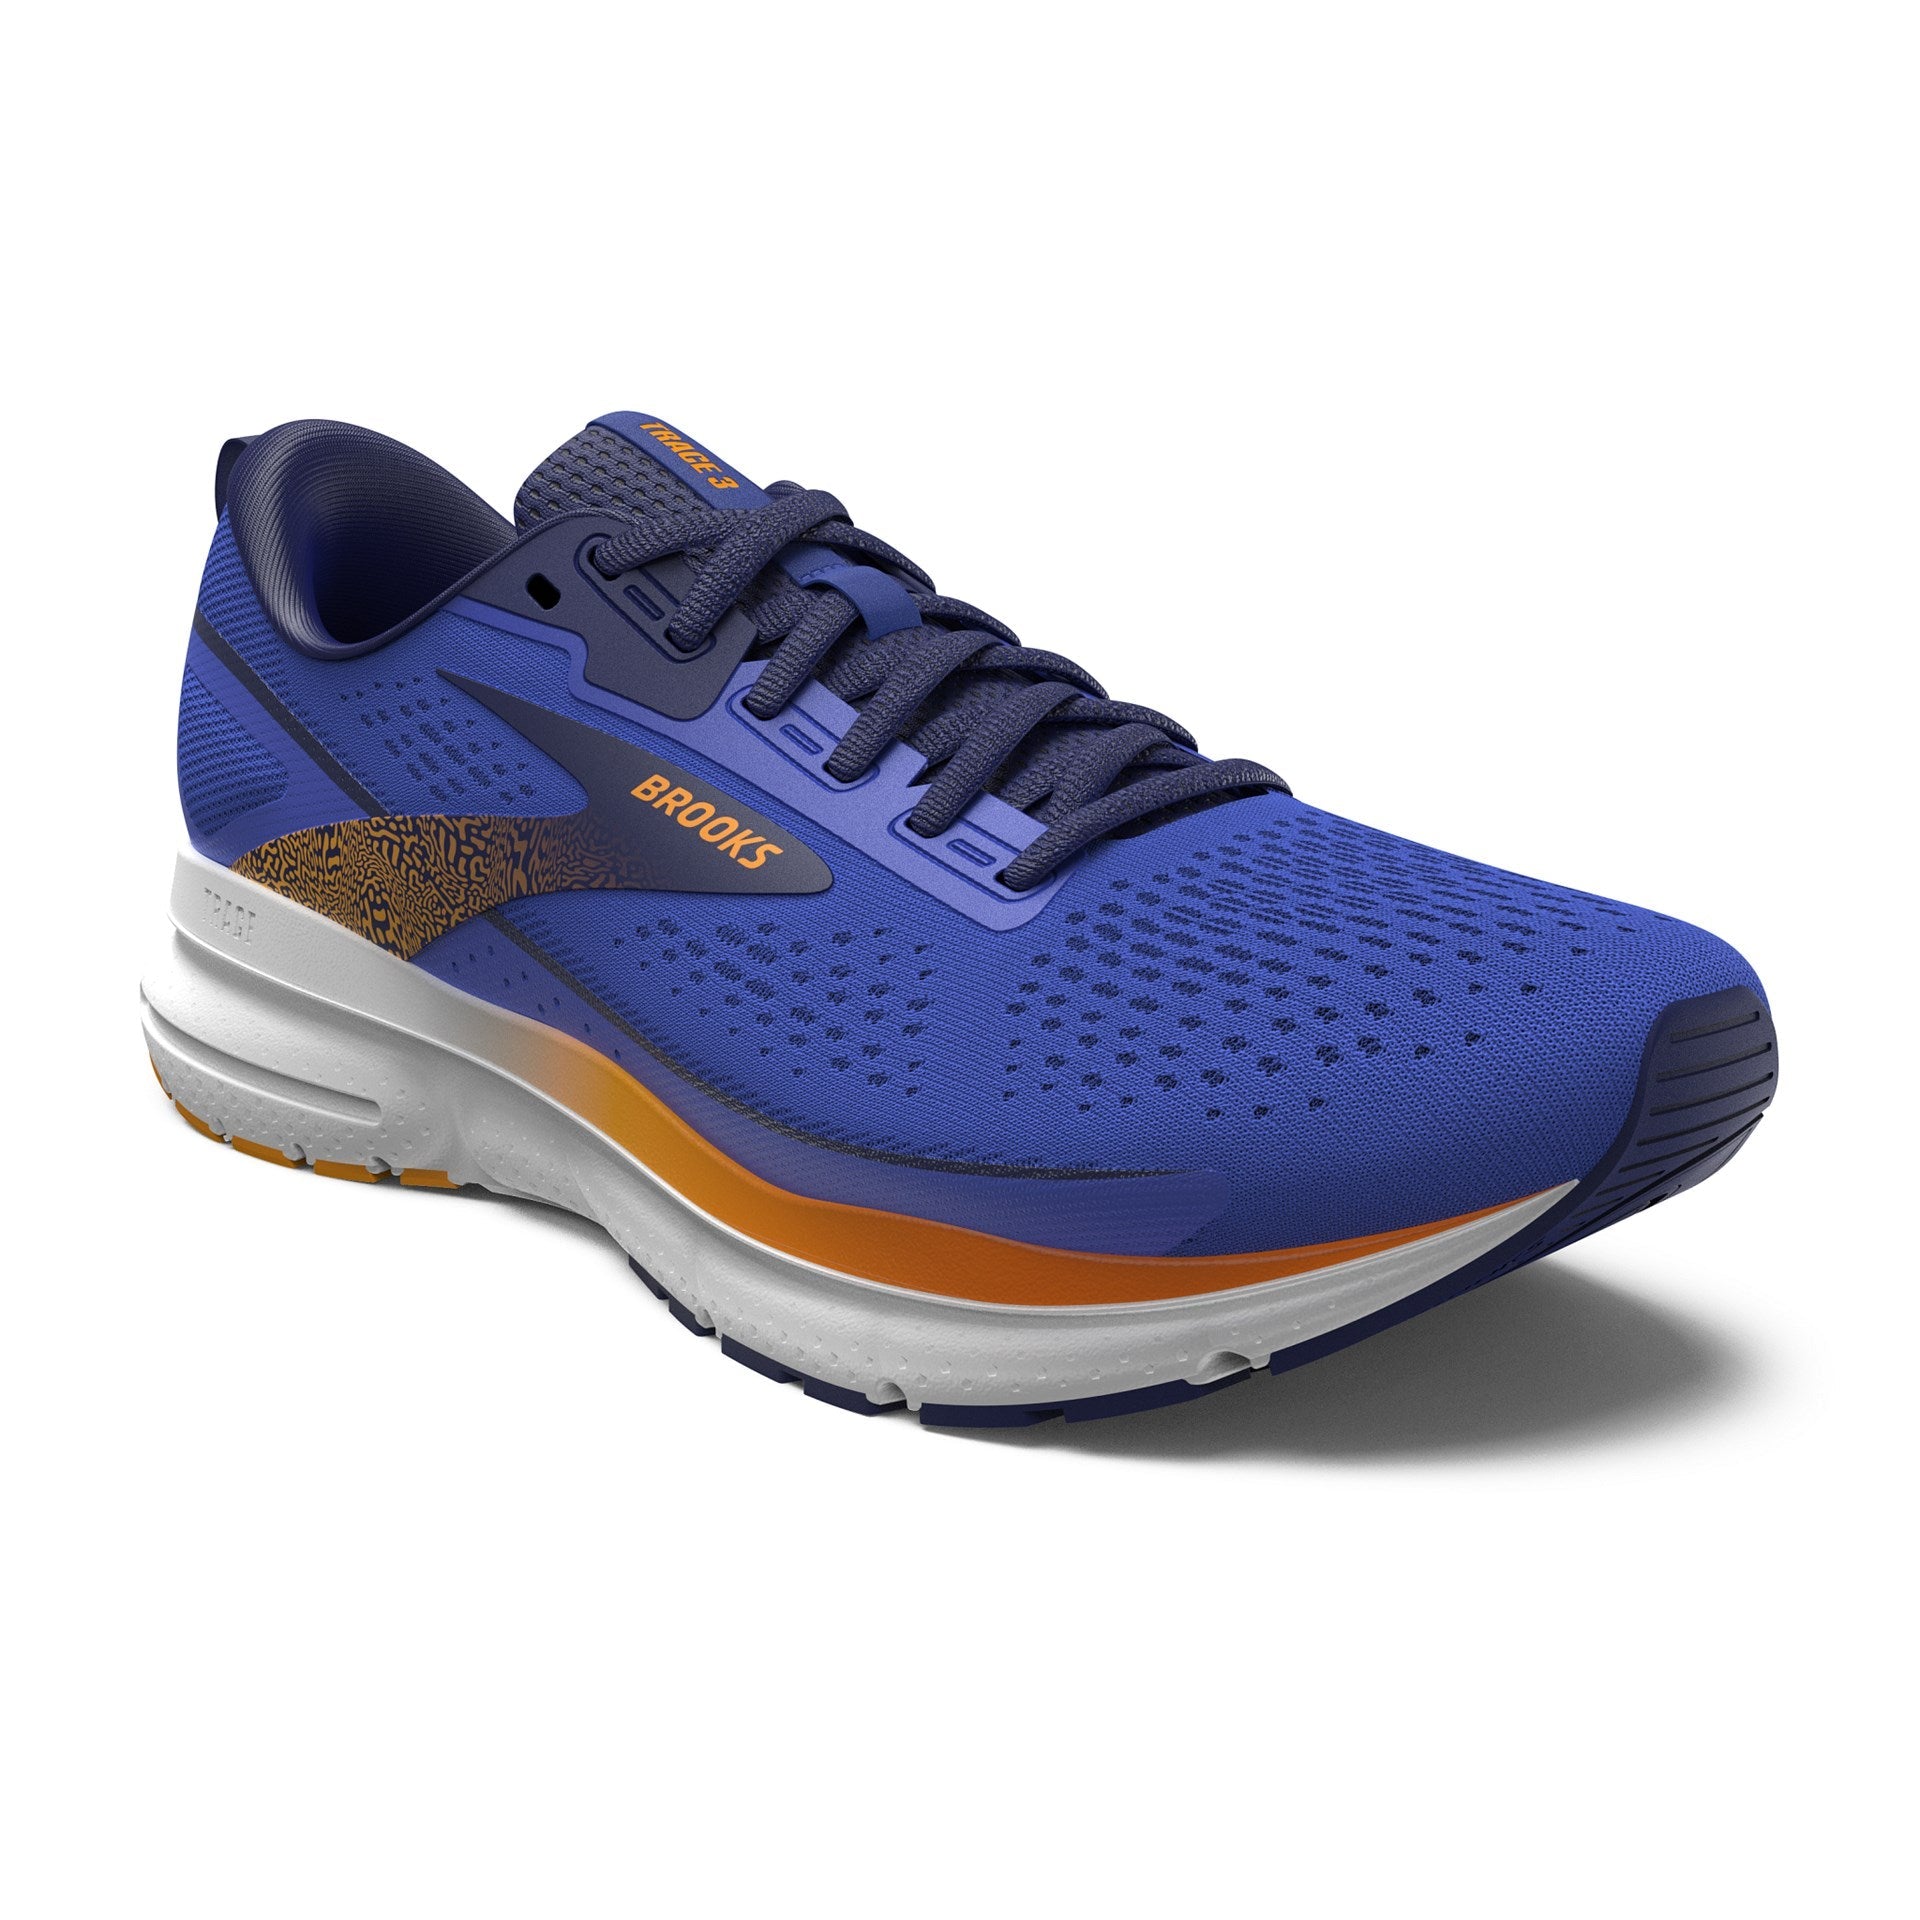 Brooks Trace 3 Running Shoes - Mens - Blue/Peacoat/Orange